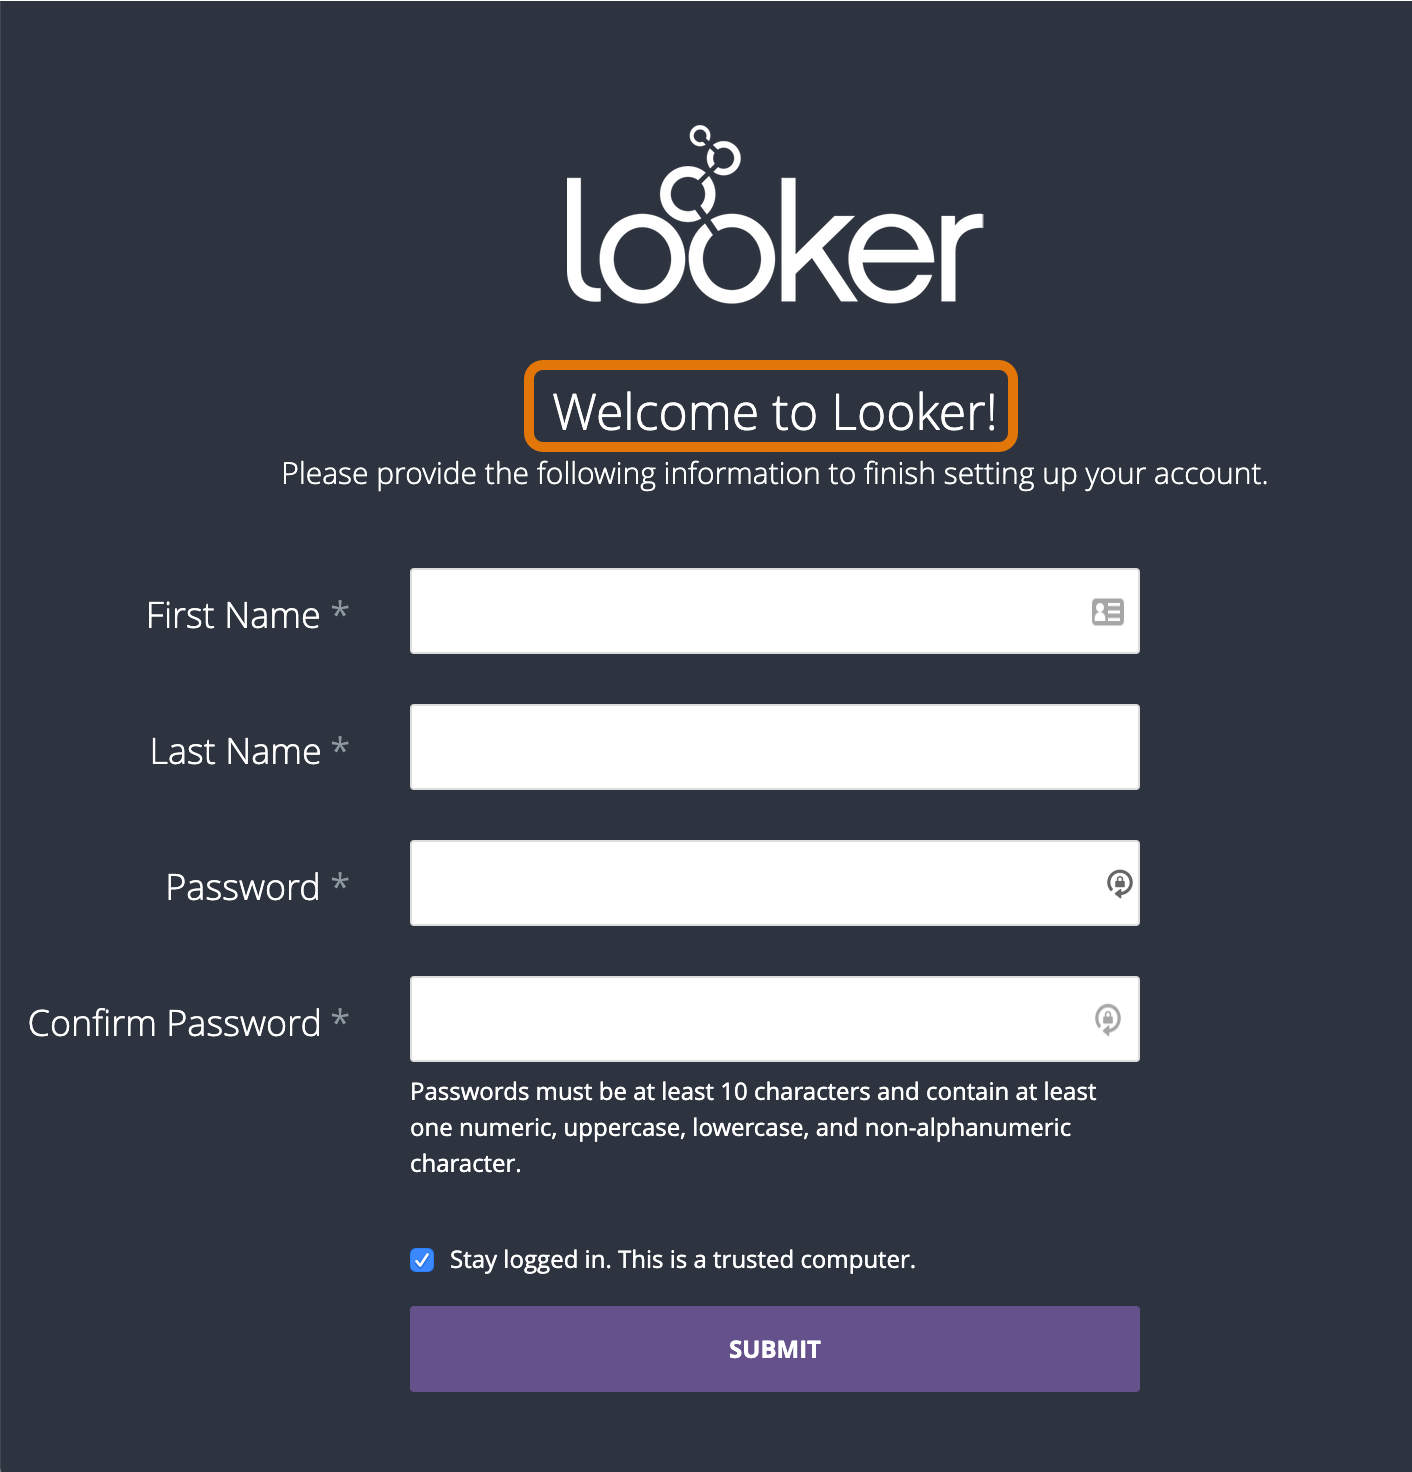 Looker 账号设置页面的屏幕截图。页面顶部有一个 Looker 徽标，后面紧跟着“Welcome to Looker!”字样。